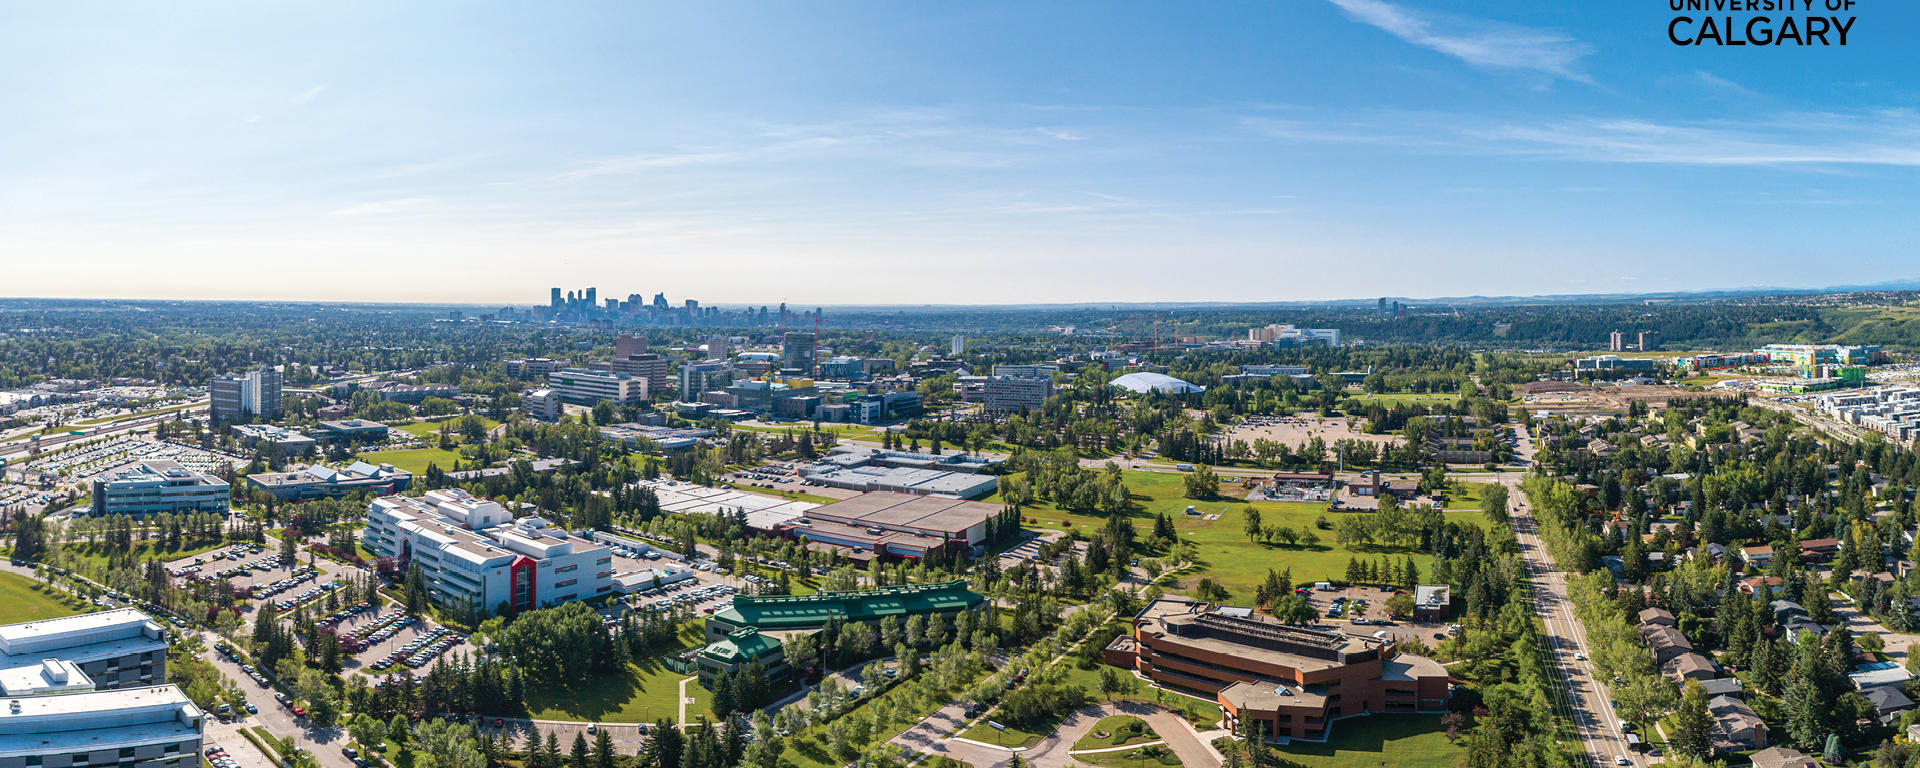 University of Calgary Main Campus